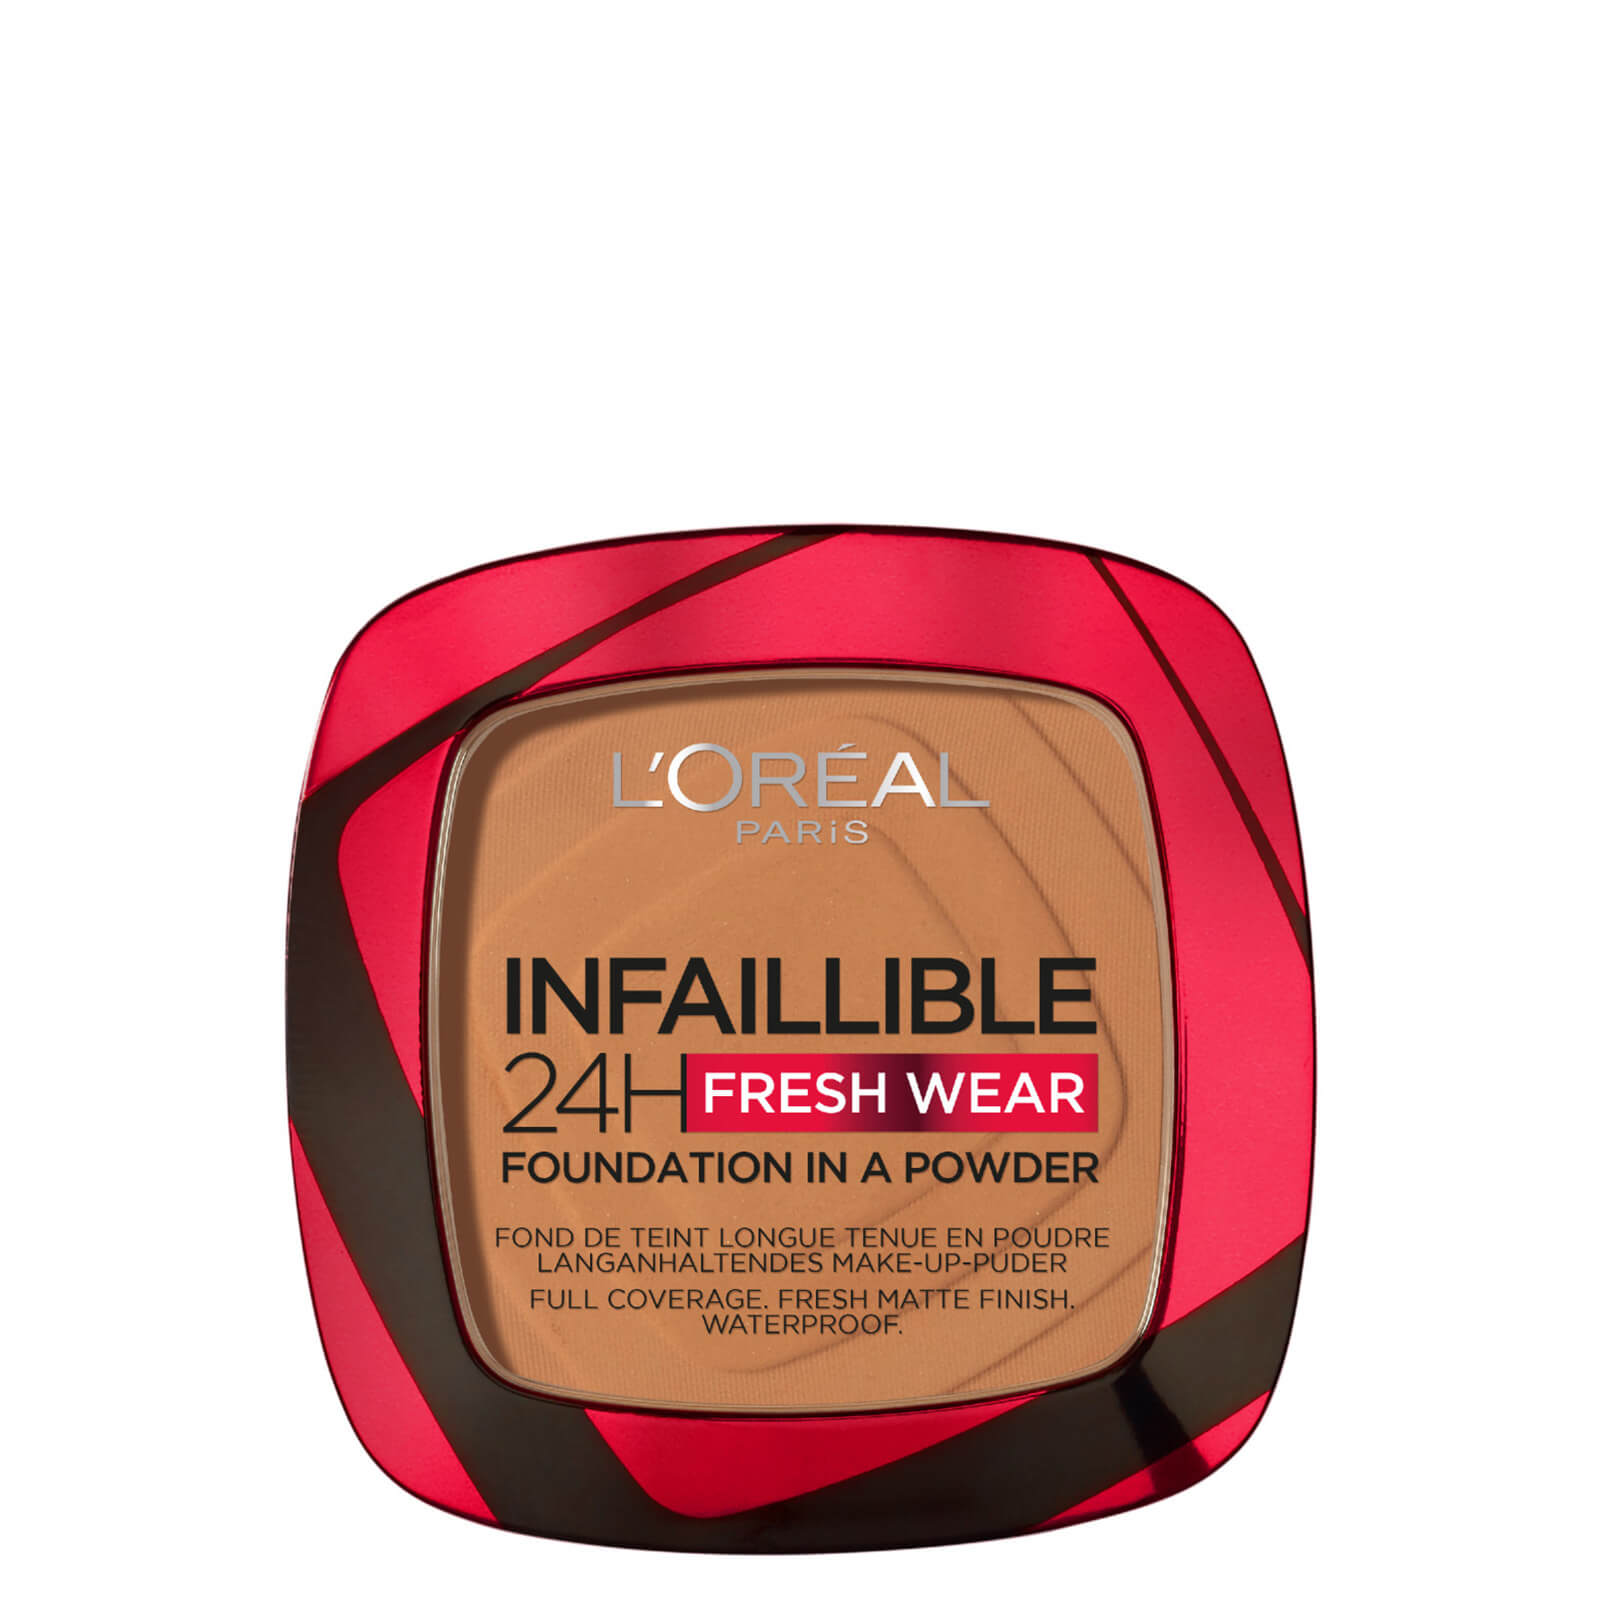 L'Oreal Paris Infallible 24 Hour Fresh Wear Foundation Powder 9g (Various Shades) - 330 Hazelnut